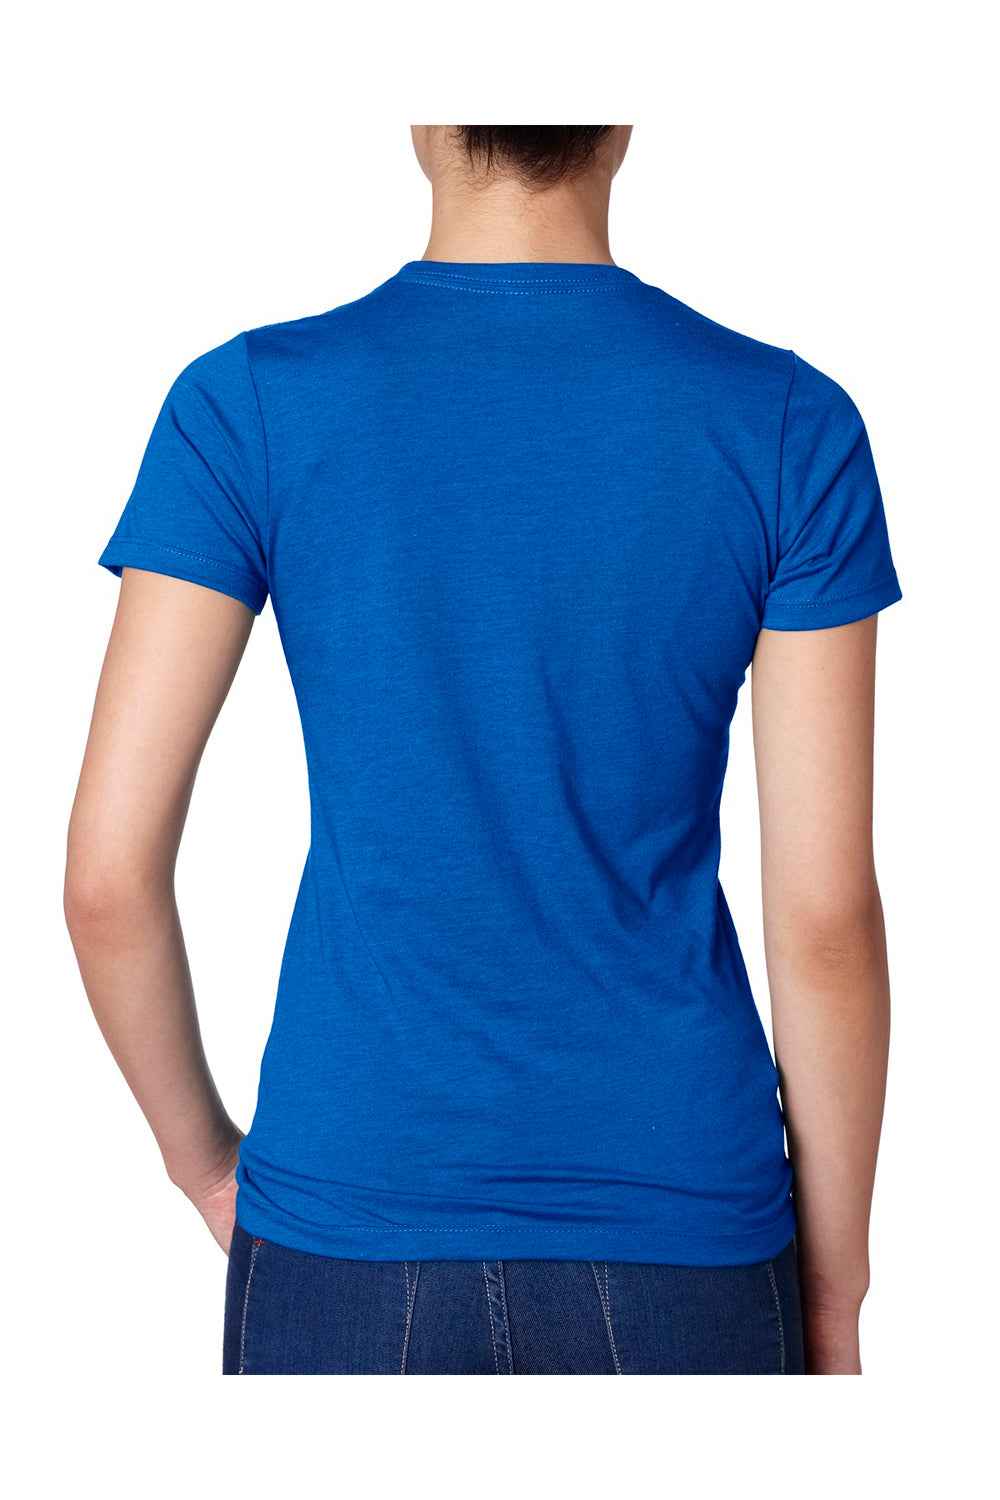 Next Level 6610 Womens CVC Jersey Short Sleeve Crewneck T-Shirt Royal Blue Back